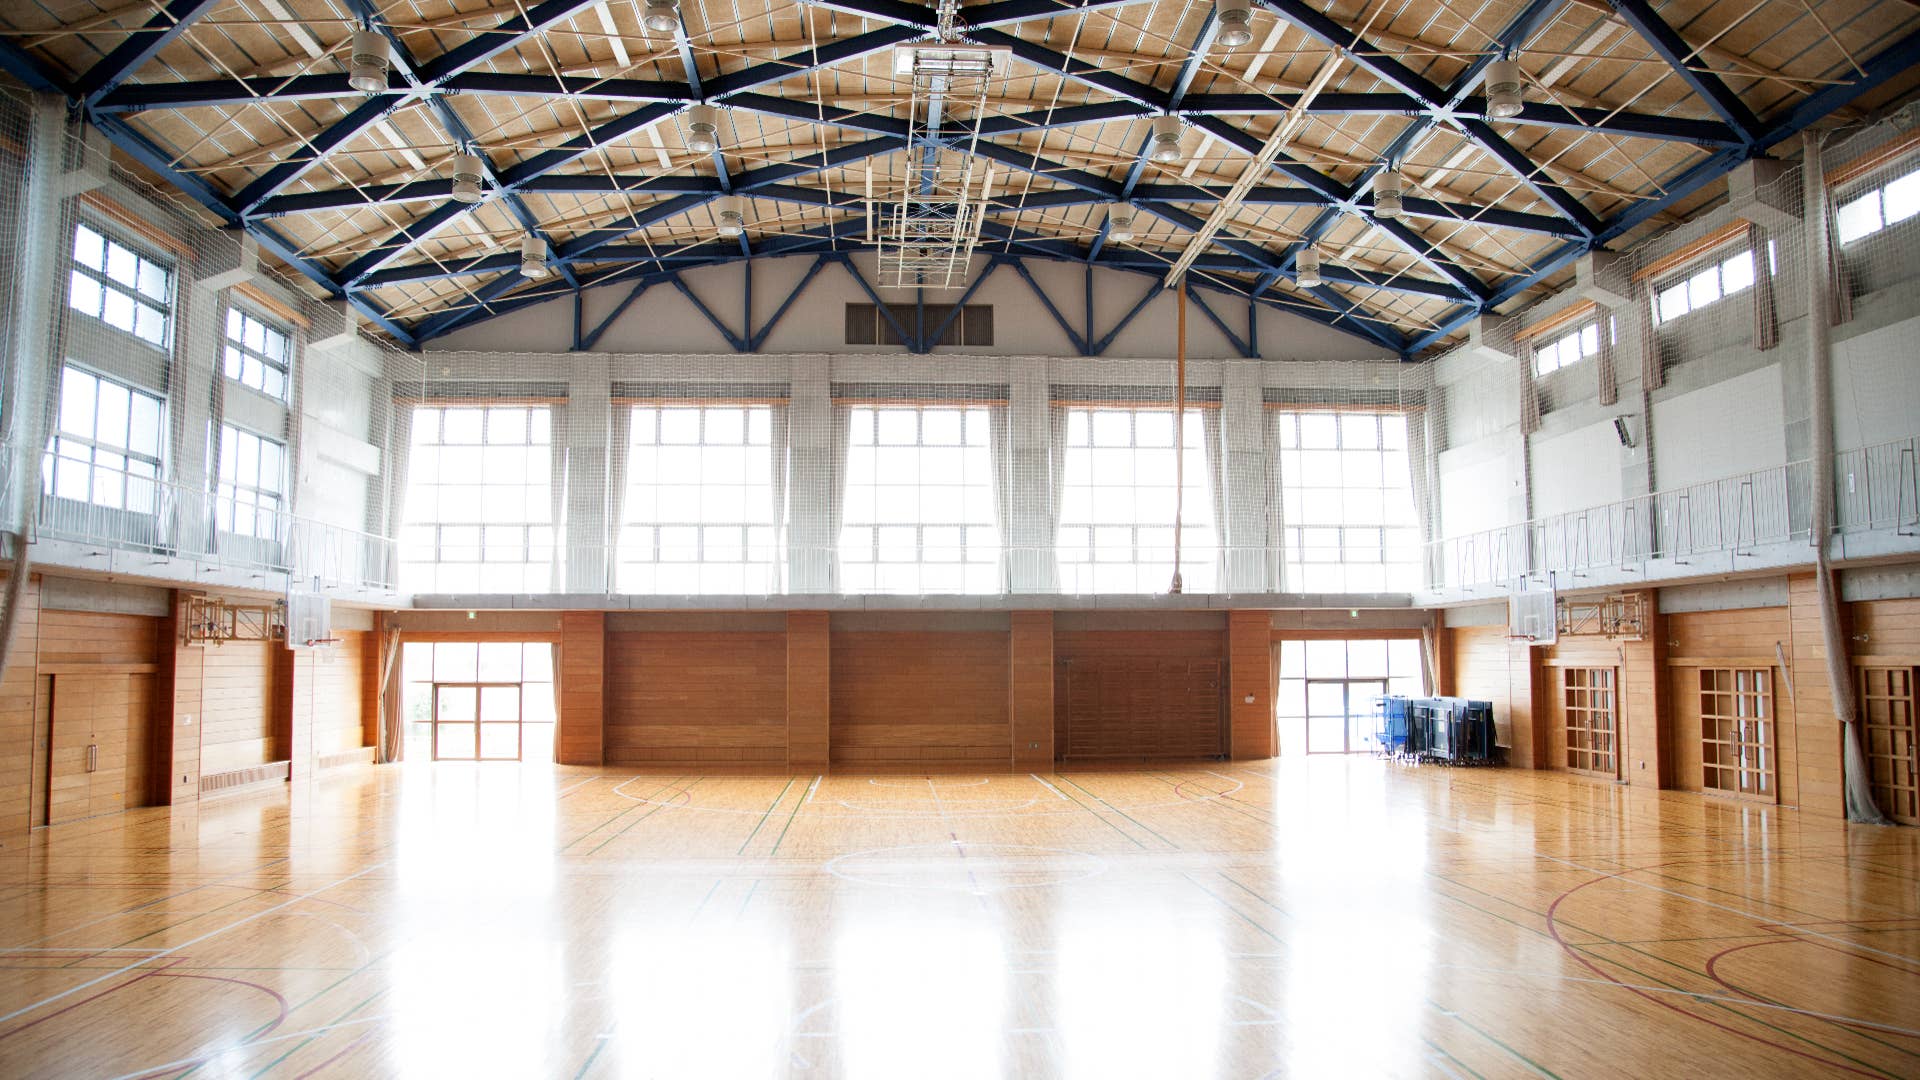 An empty school gymnasium. Basketball court markings.